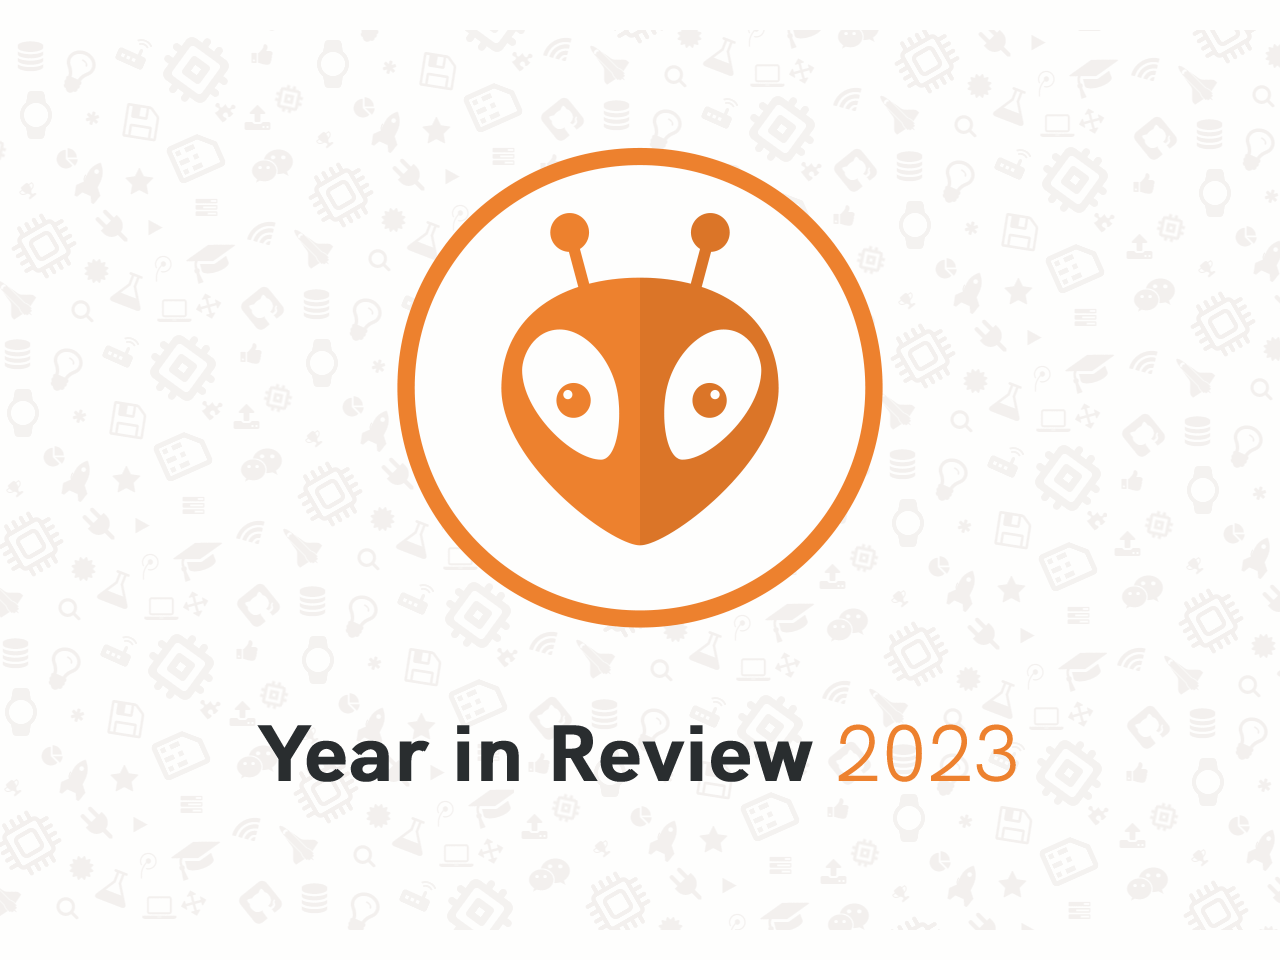 PlatformIO 2023 Year in Review